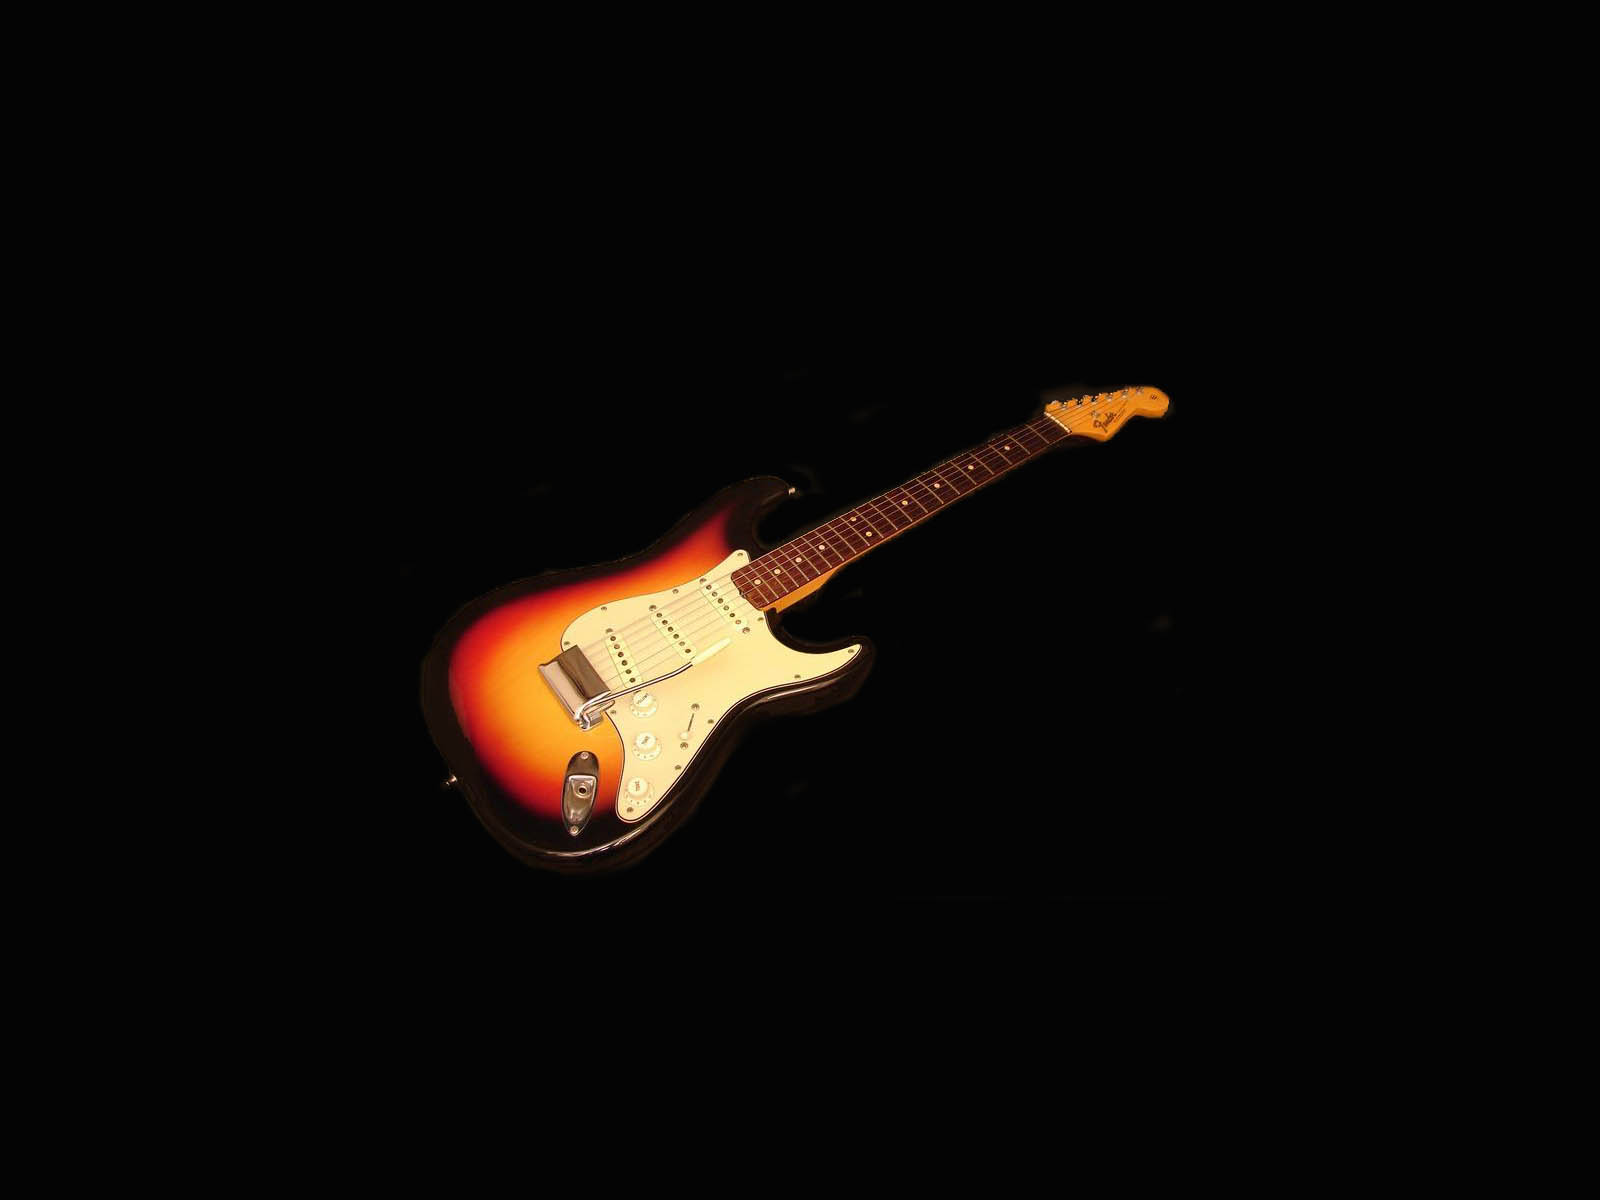 Guitar Fender Stratocaster Black Wallpaper Hd Wallpapers